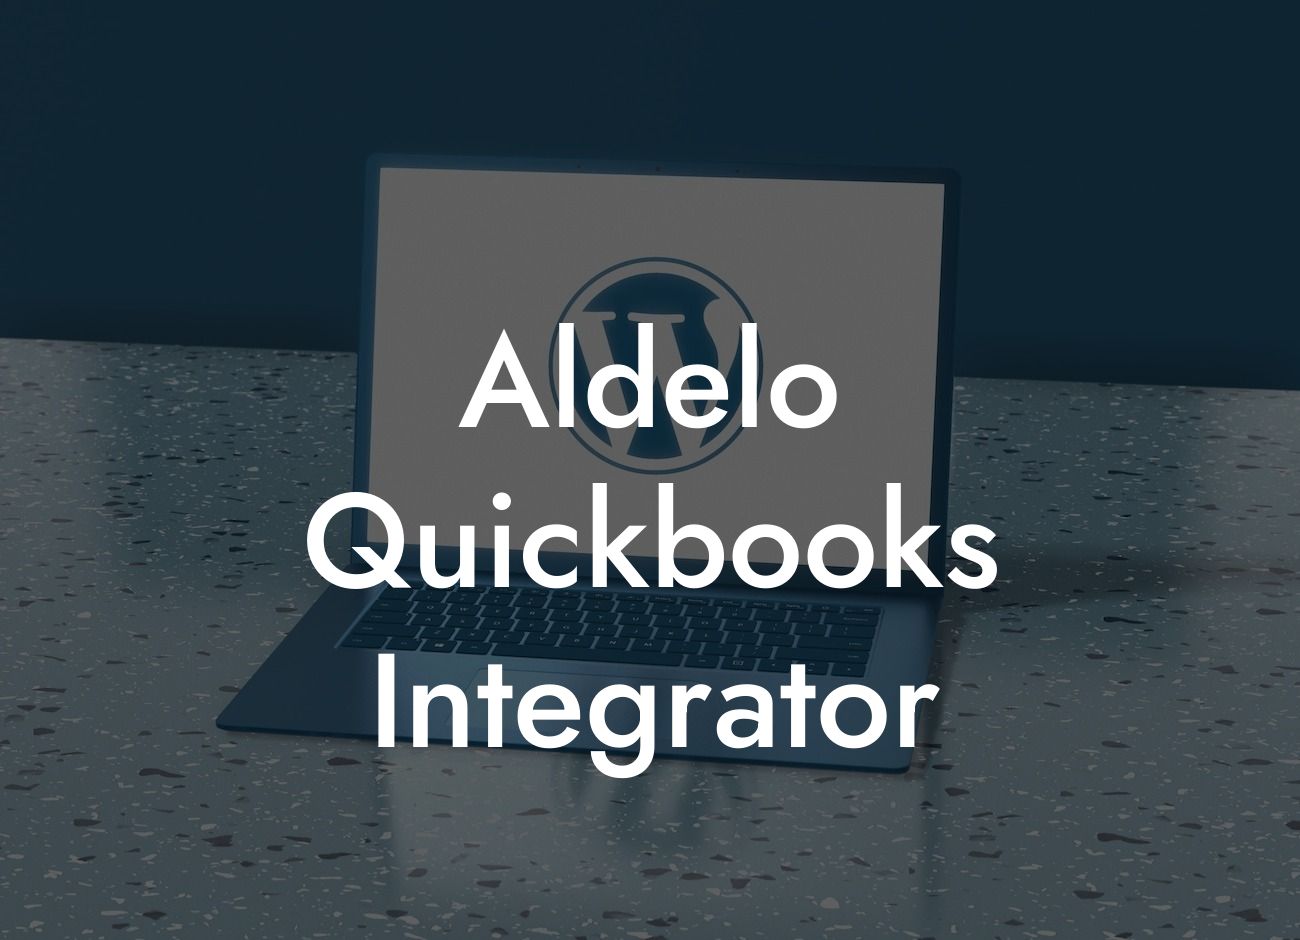 Aldelo Quickbooks Integrator